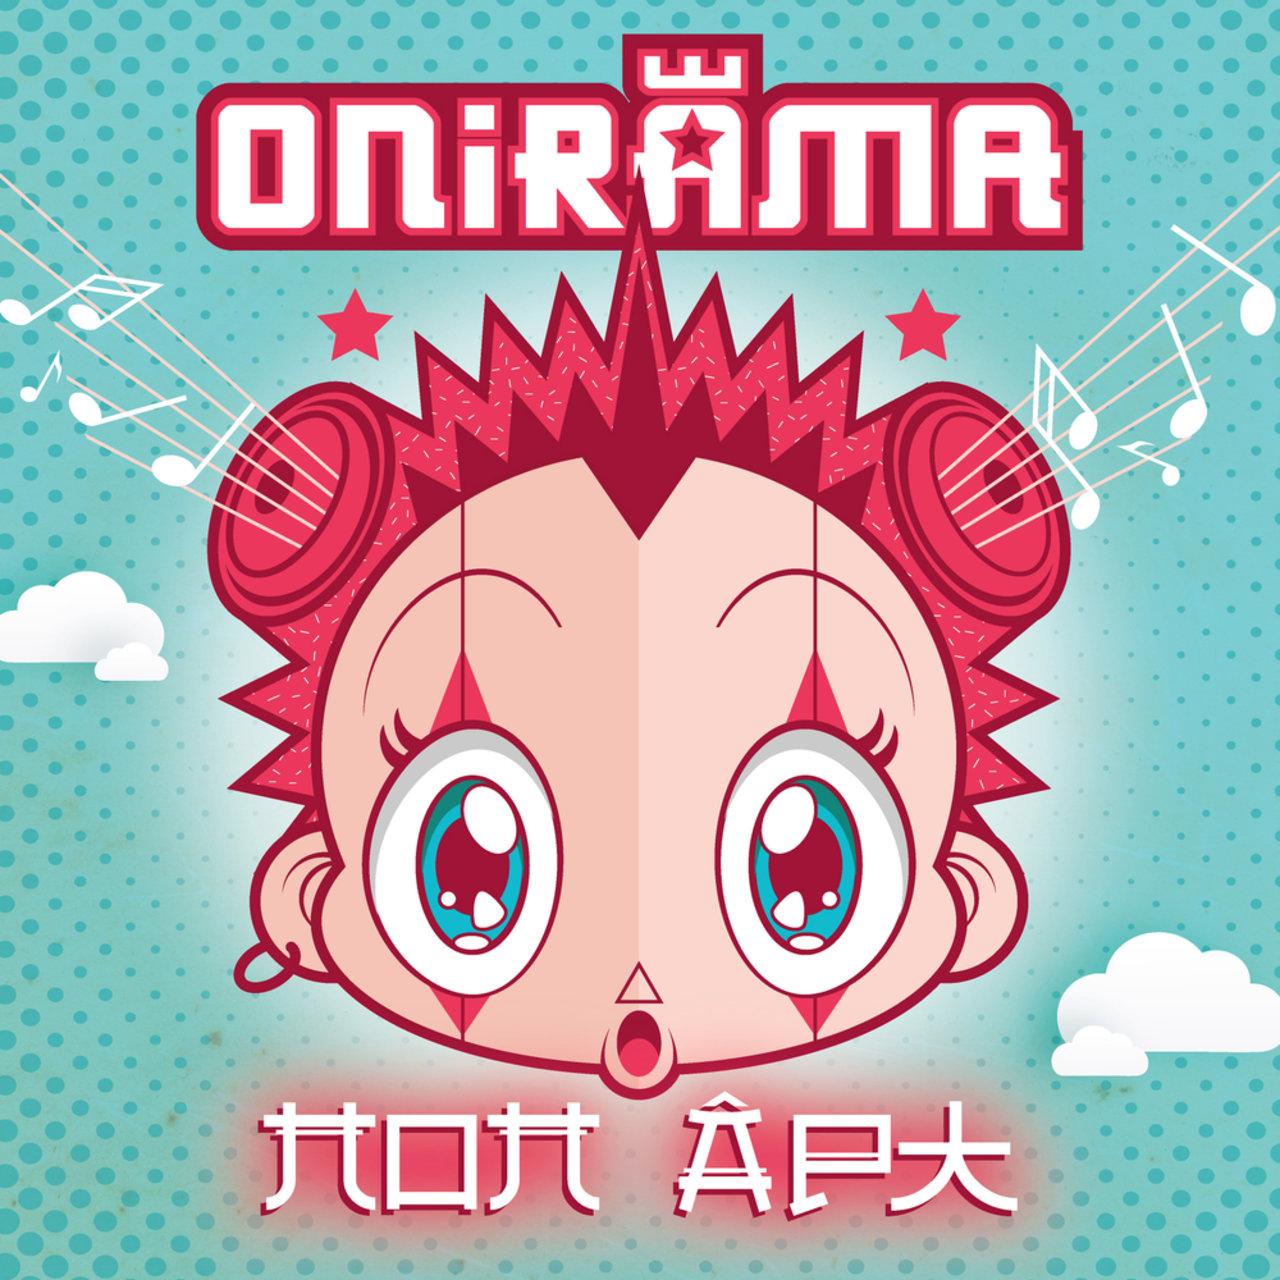 Onirama Pop Art cover artwork